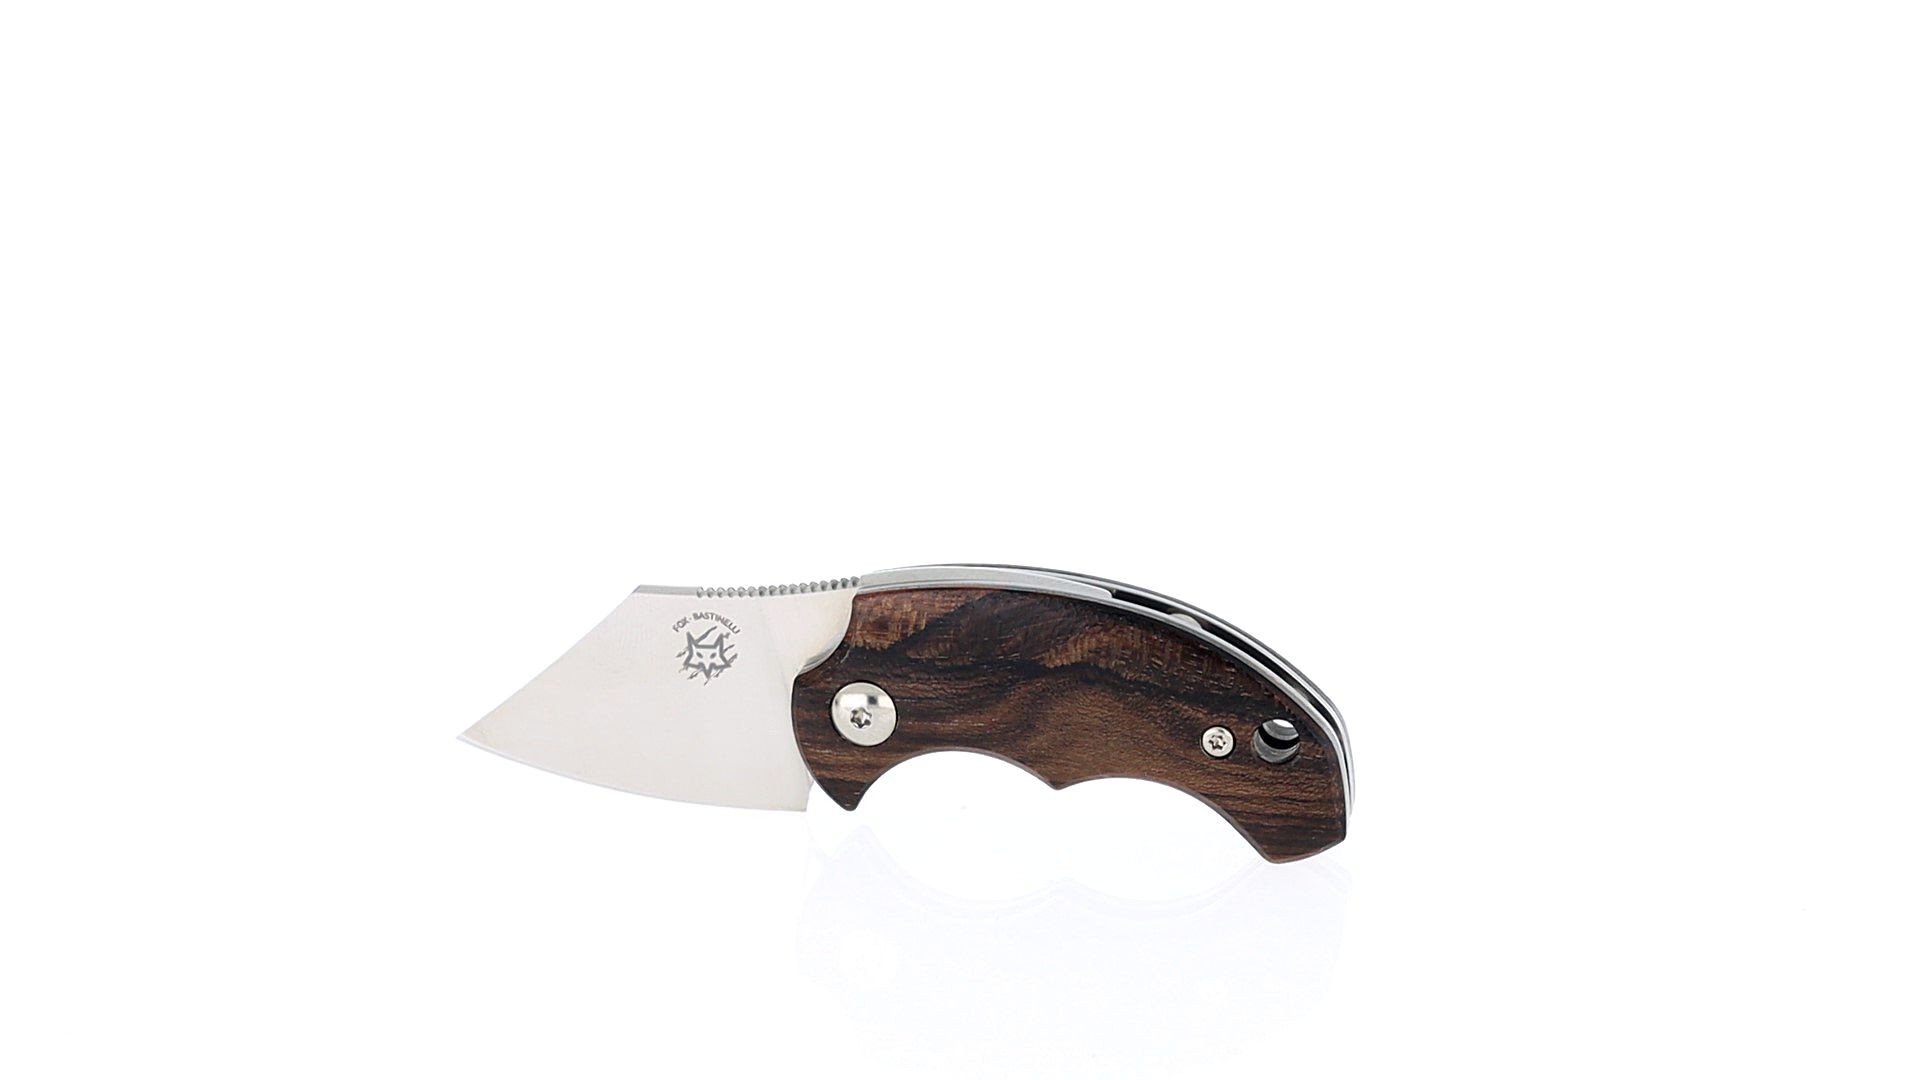 Drago Piemontes cigar cutter knife Ziricote HDL wood handle